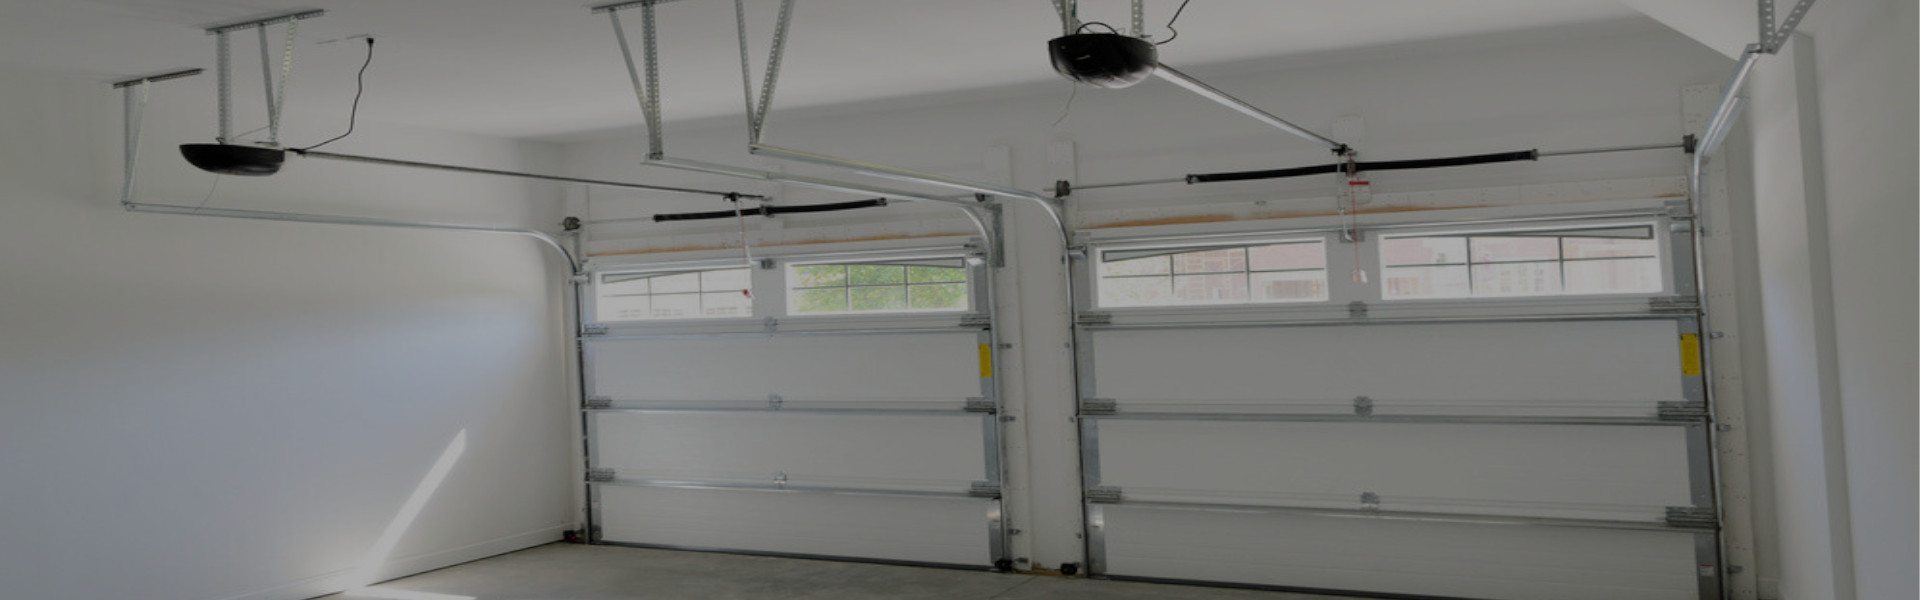 Slider Garage Door Repair, Glaziers in Winchmore Hill, N21